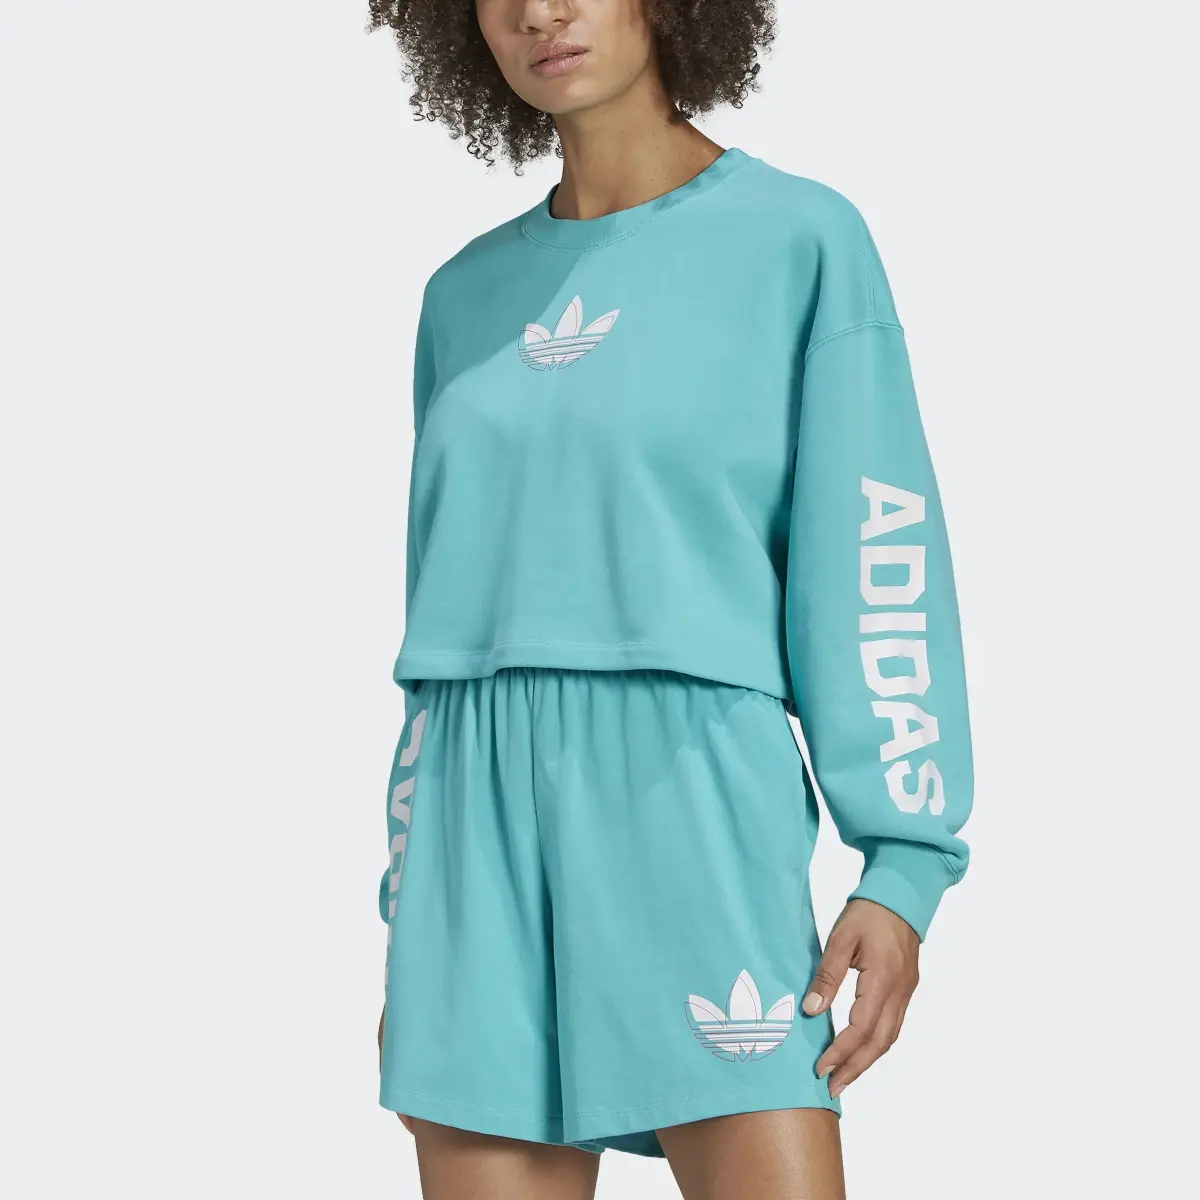 Adidas Streetball Sweater. 1